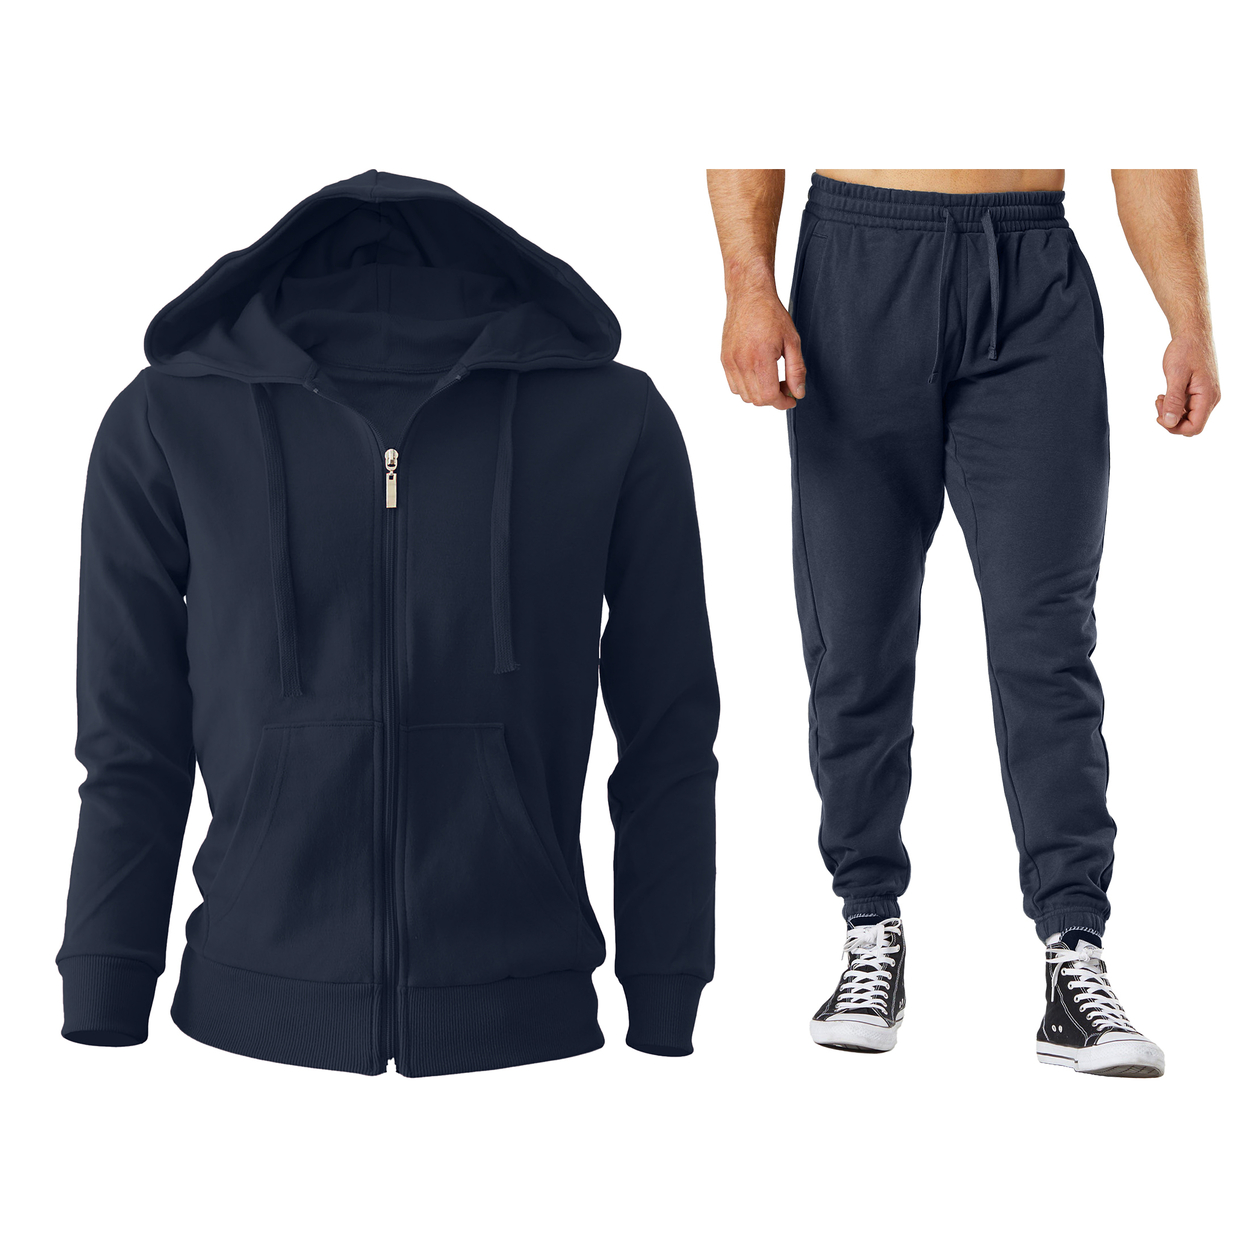 2/4-Piece: Men's Winter Warm Cozy Athletic Multi-Pockets BIG & TALL Sweatsuit Set - Black, 2, Xx-large